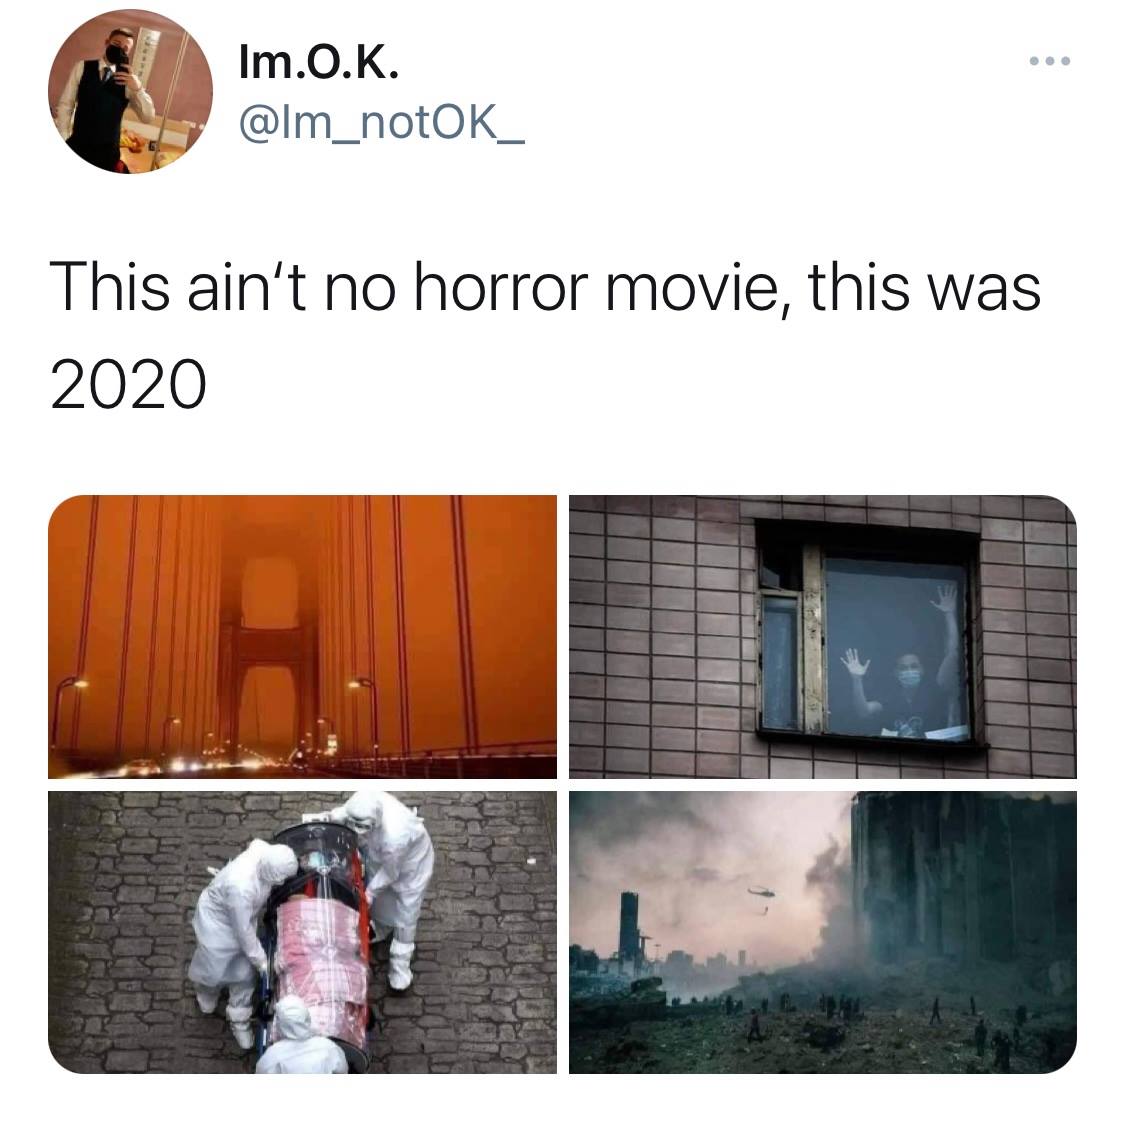 presentation - Im.O.K. This ain't no horror movie, this was 2020 La